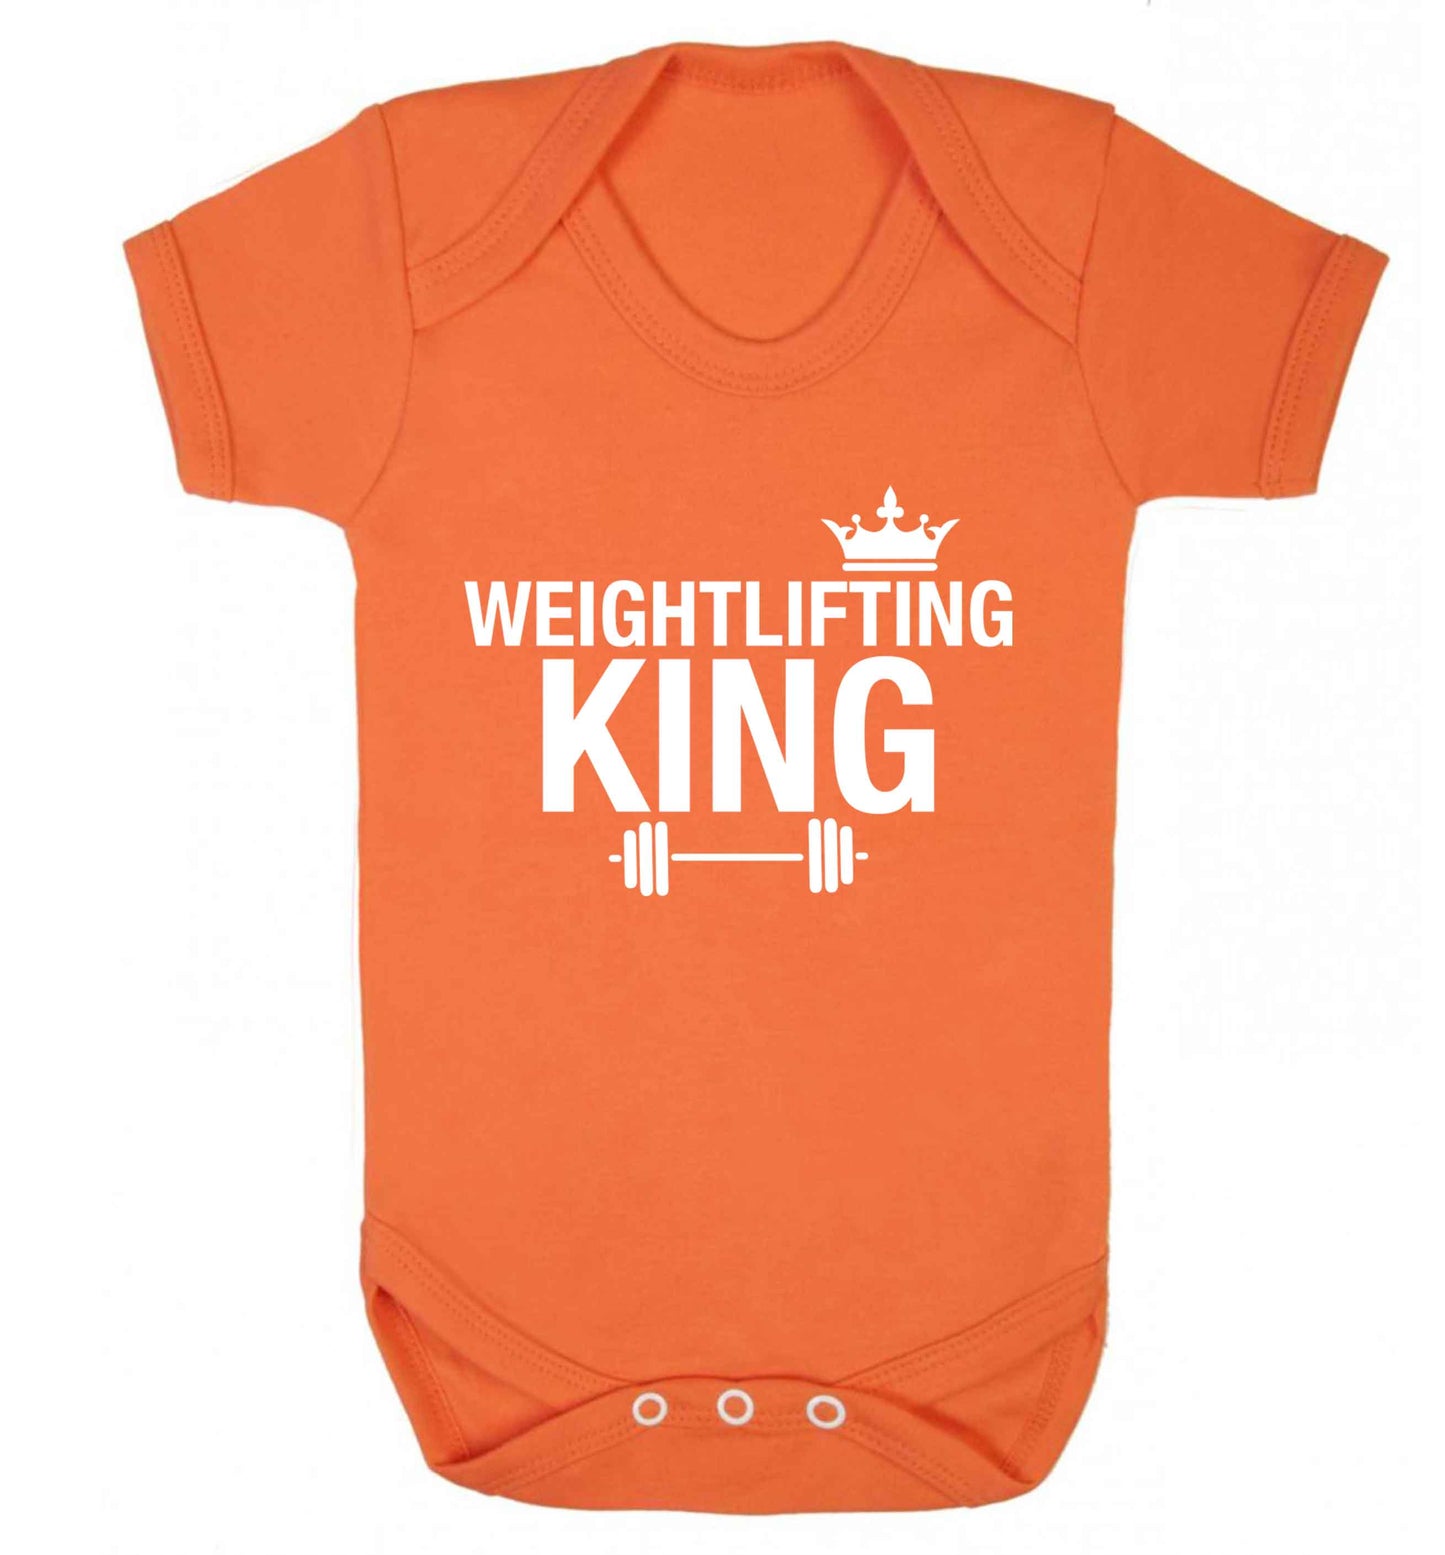 Weightlifting king Baby Vest orange 18-24 months